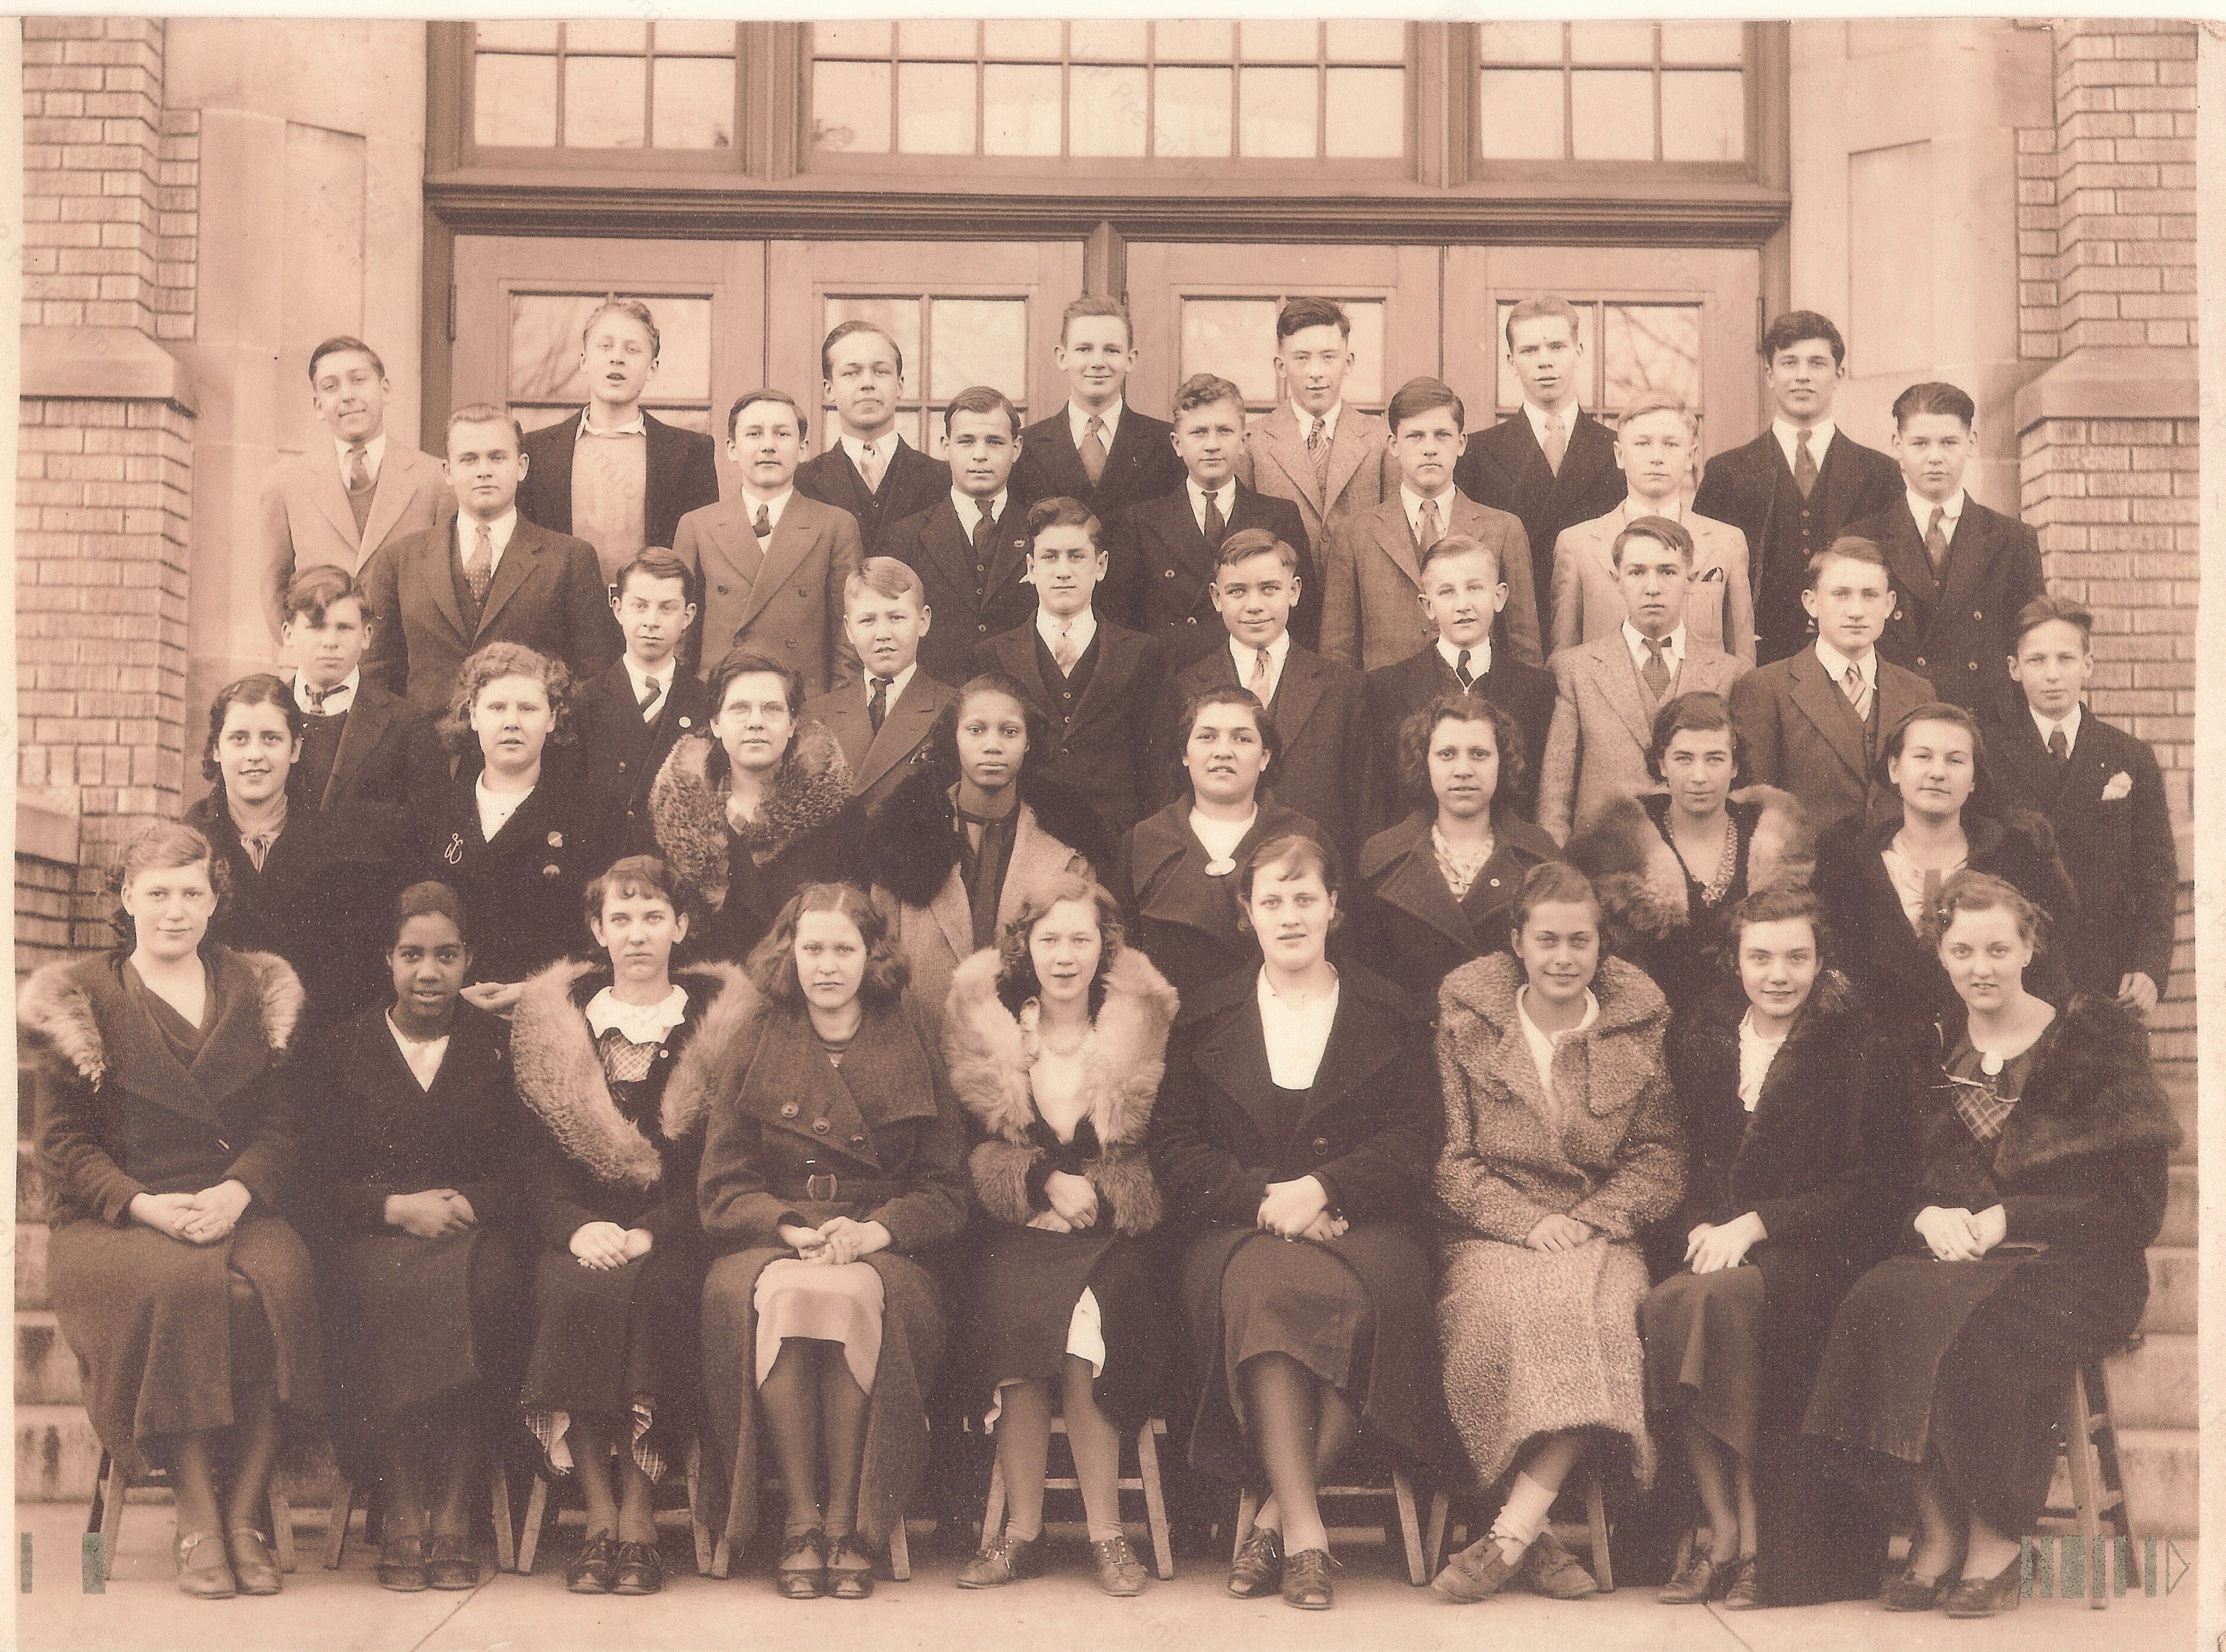 William Penn High School Class Photo, circa 1936